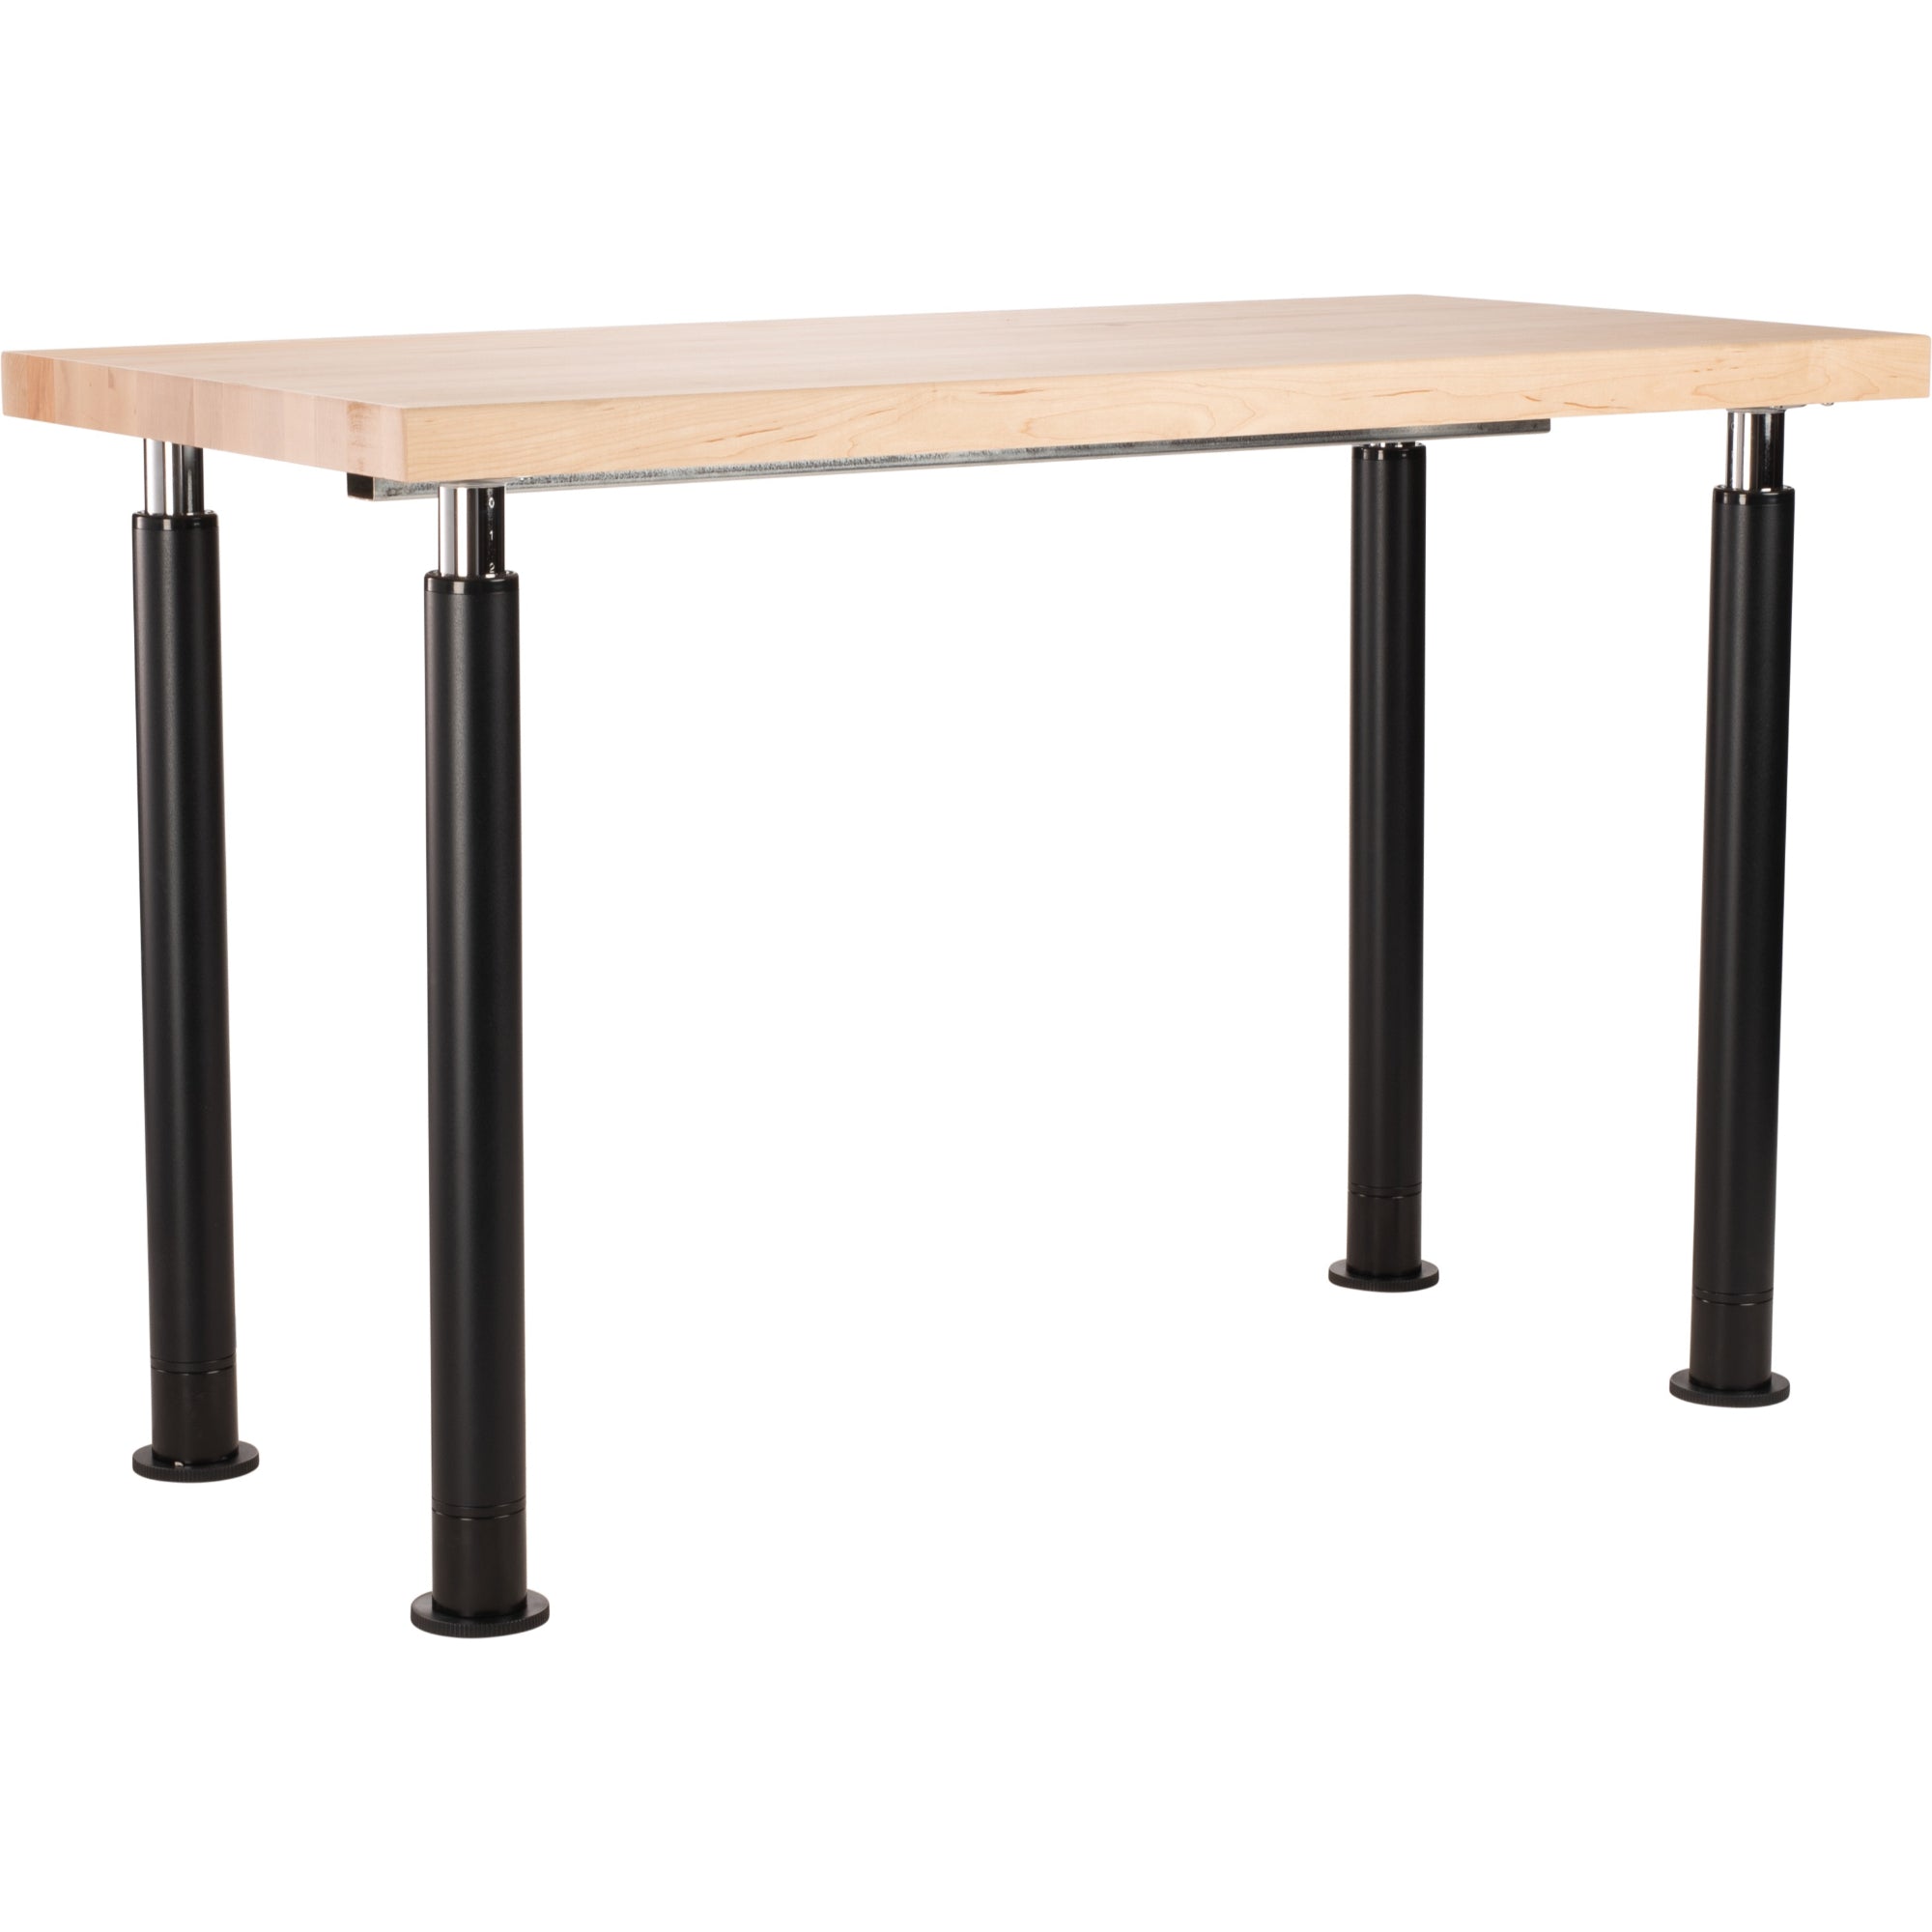 Designer Series Adjustable Height Science Table, 24" x 48" x 27"-42" H, Butcherblock Top